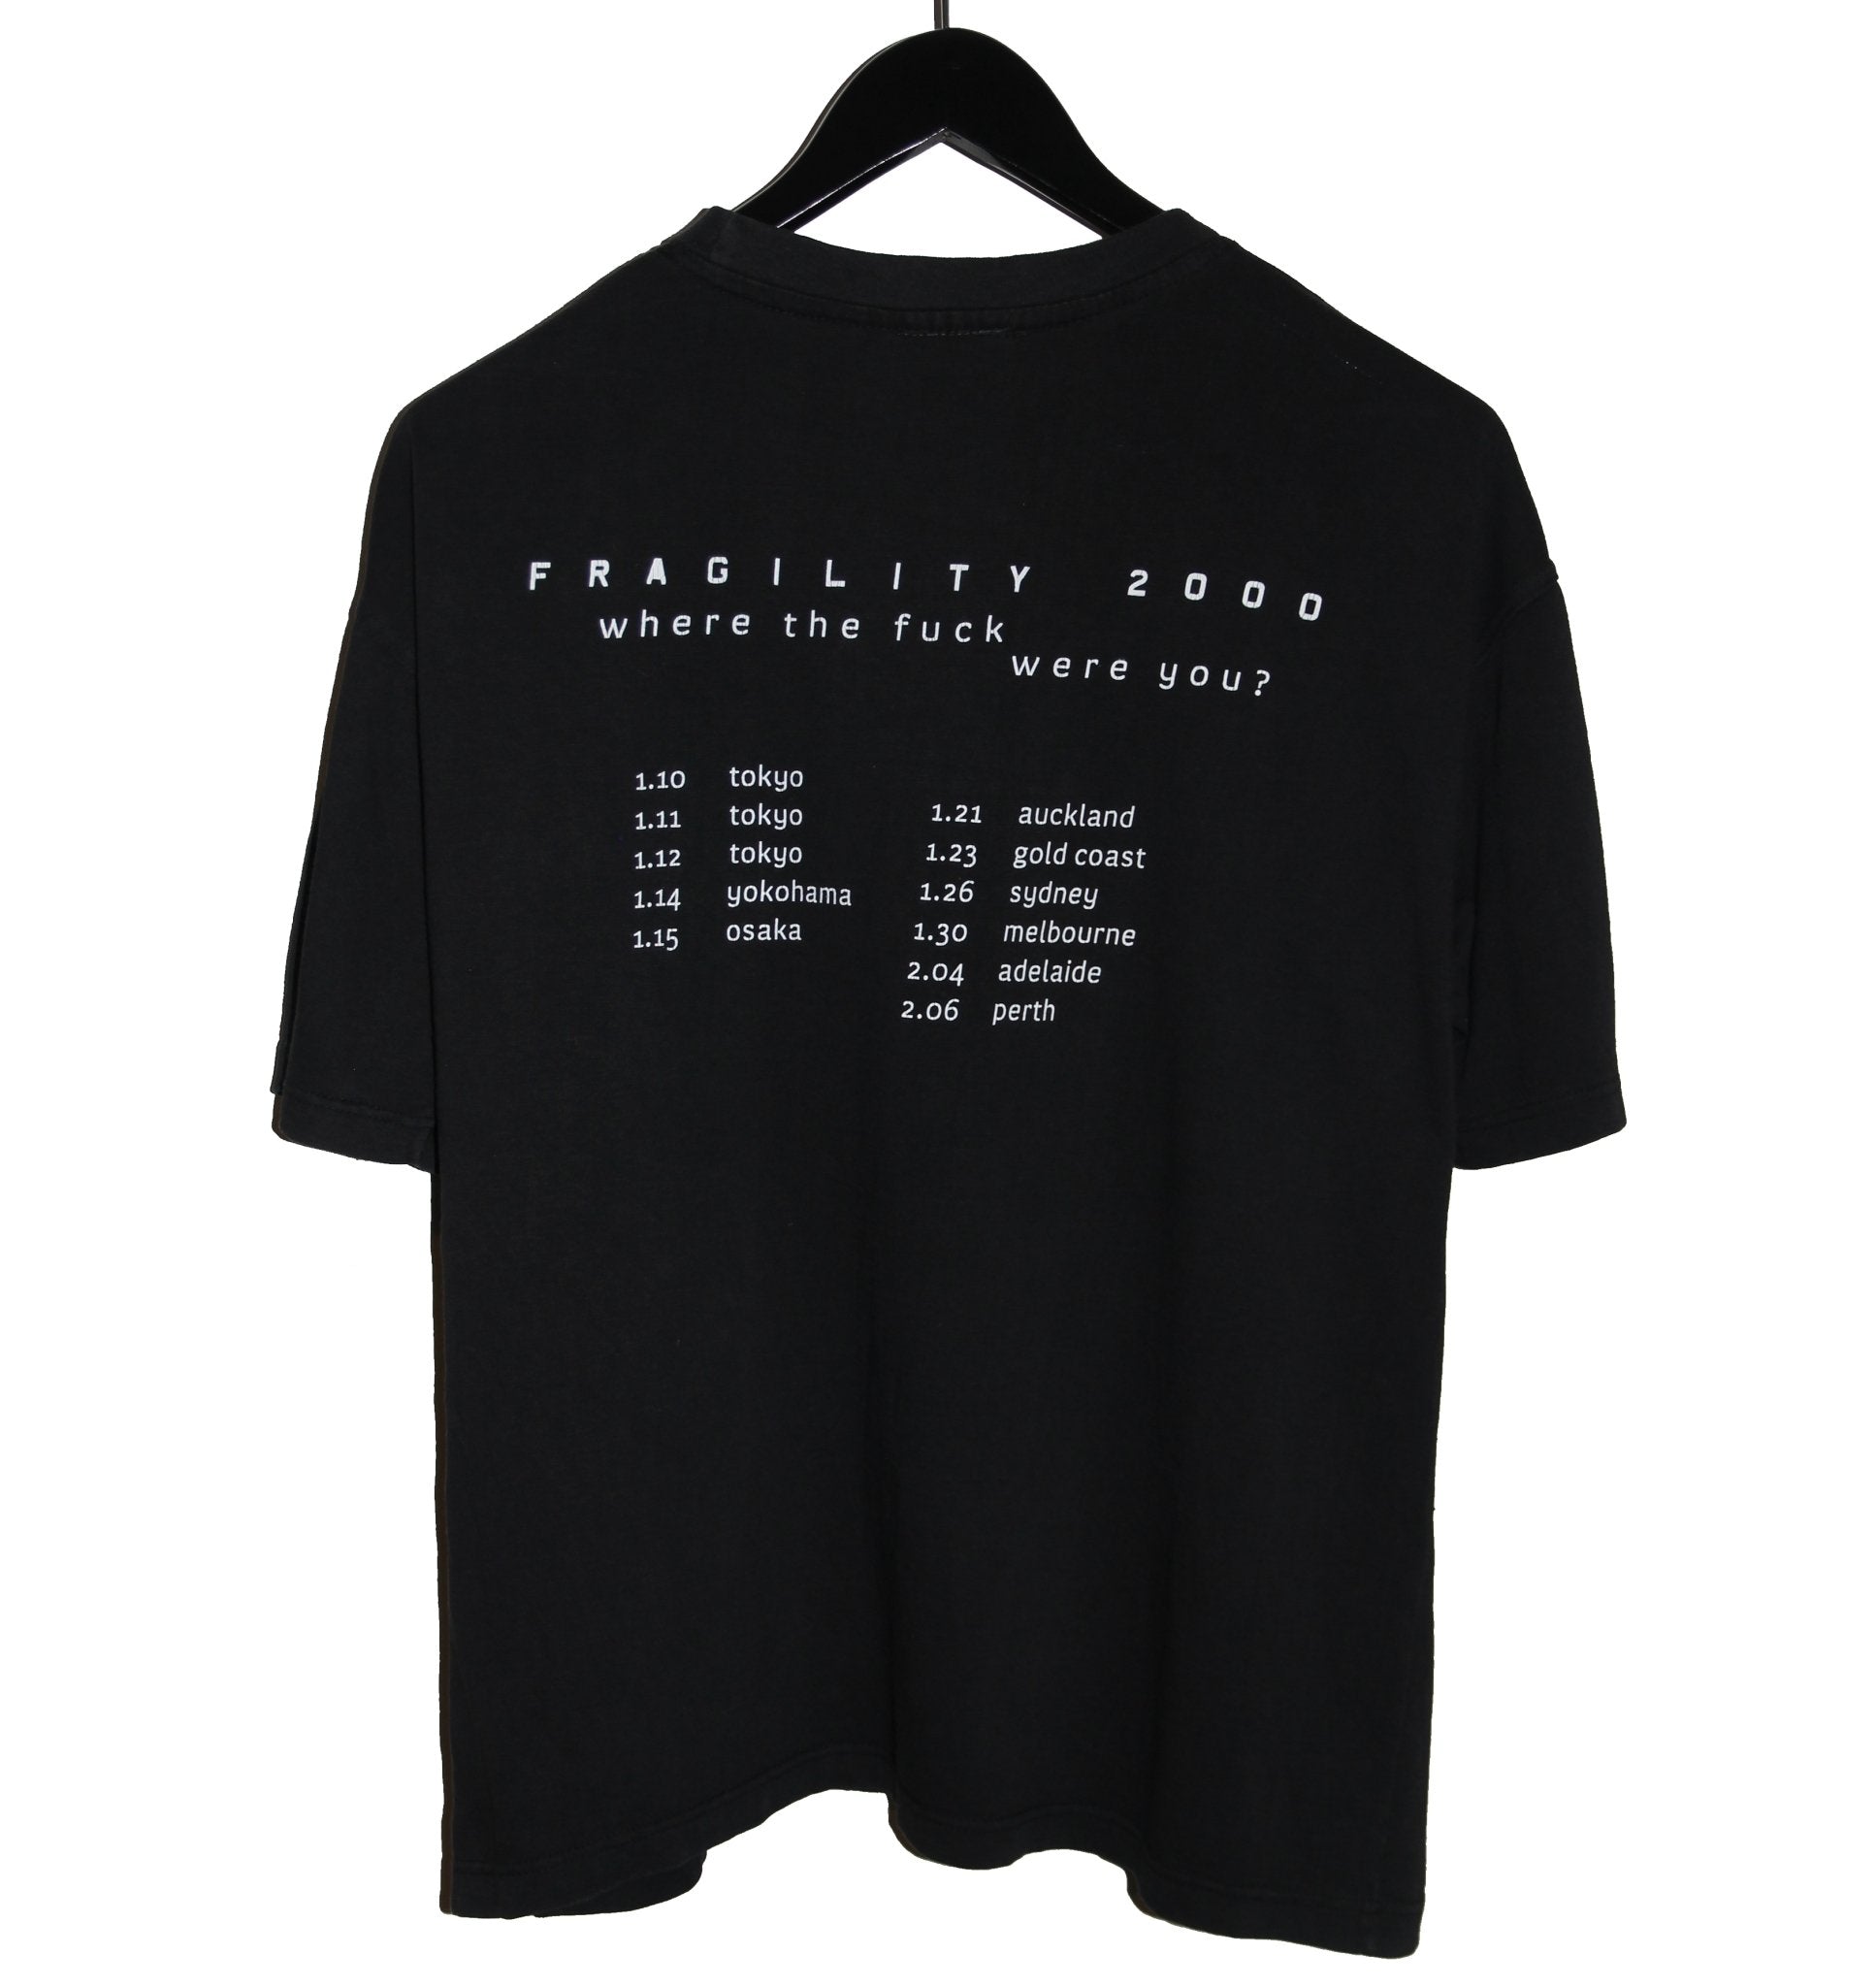 Nine Inch Nails 2000 Fragility Tour Shirt - Faded AU